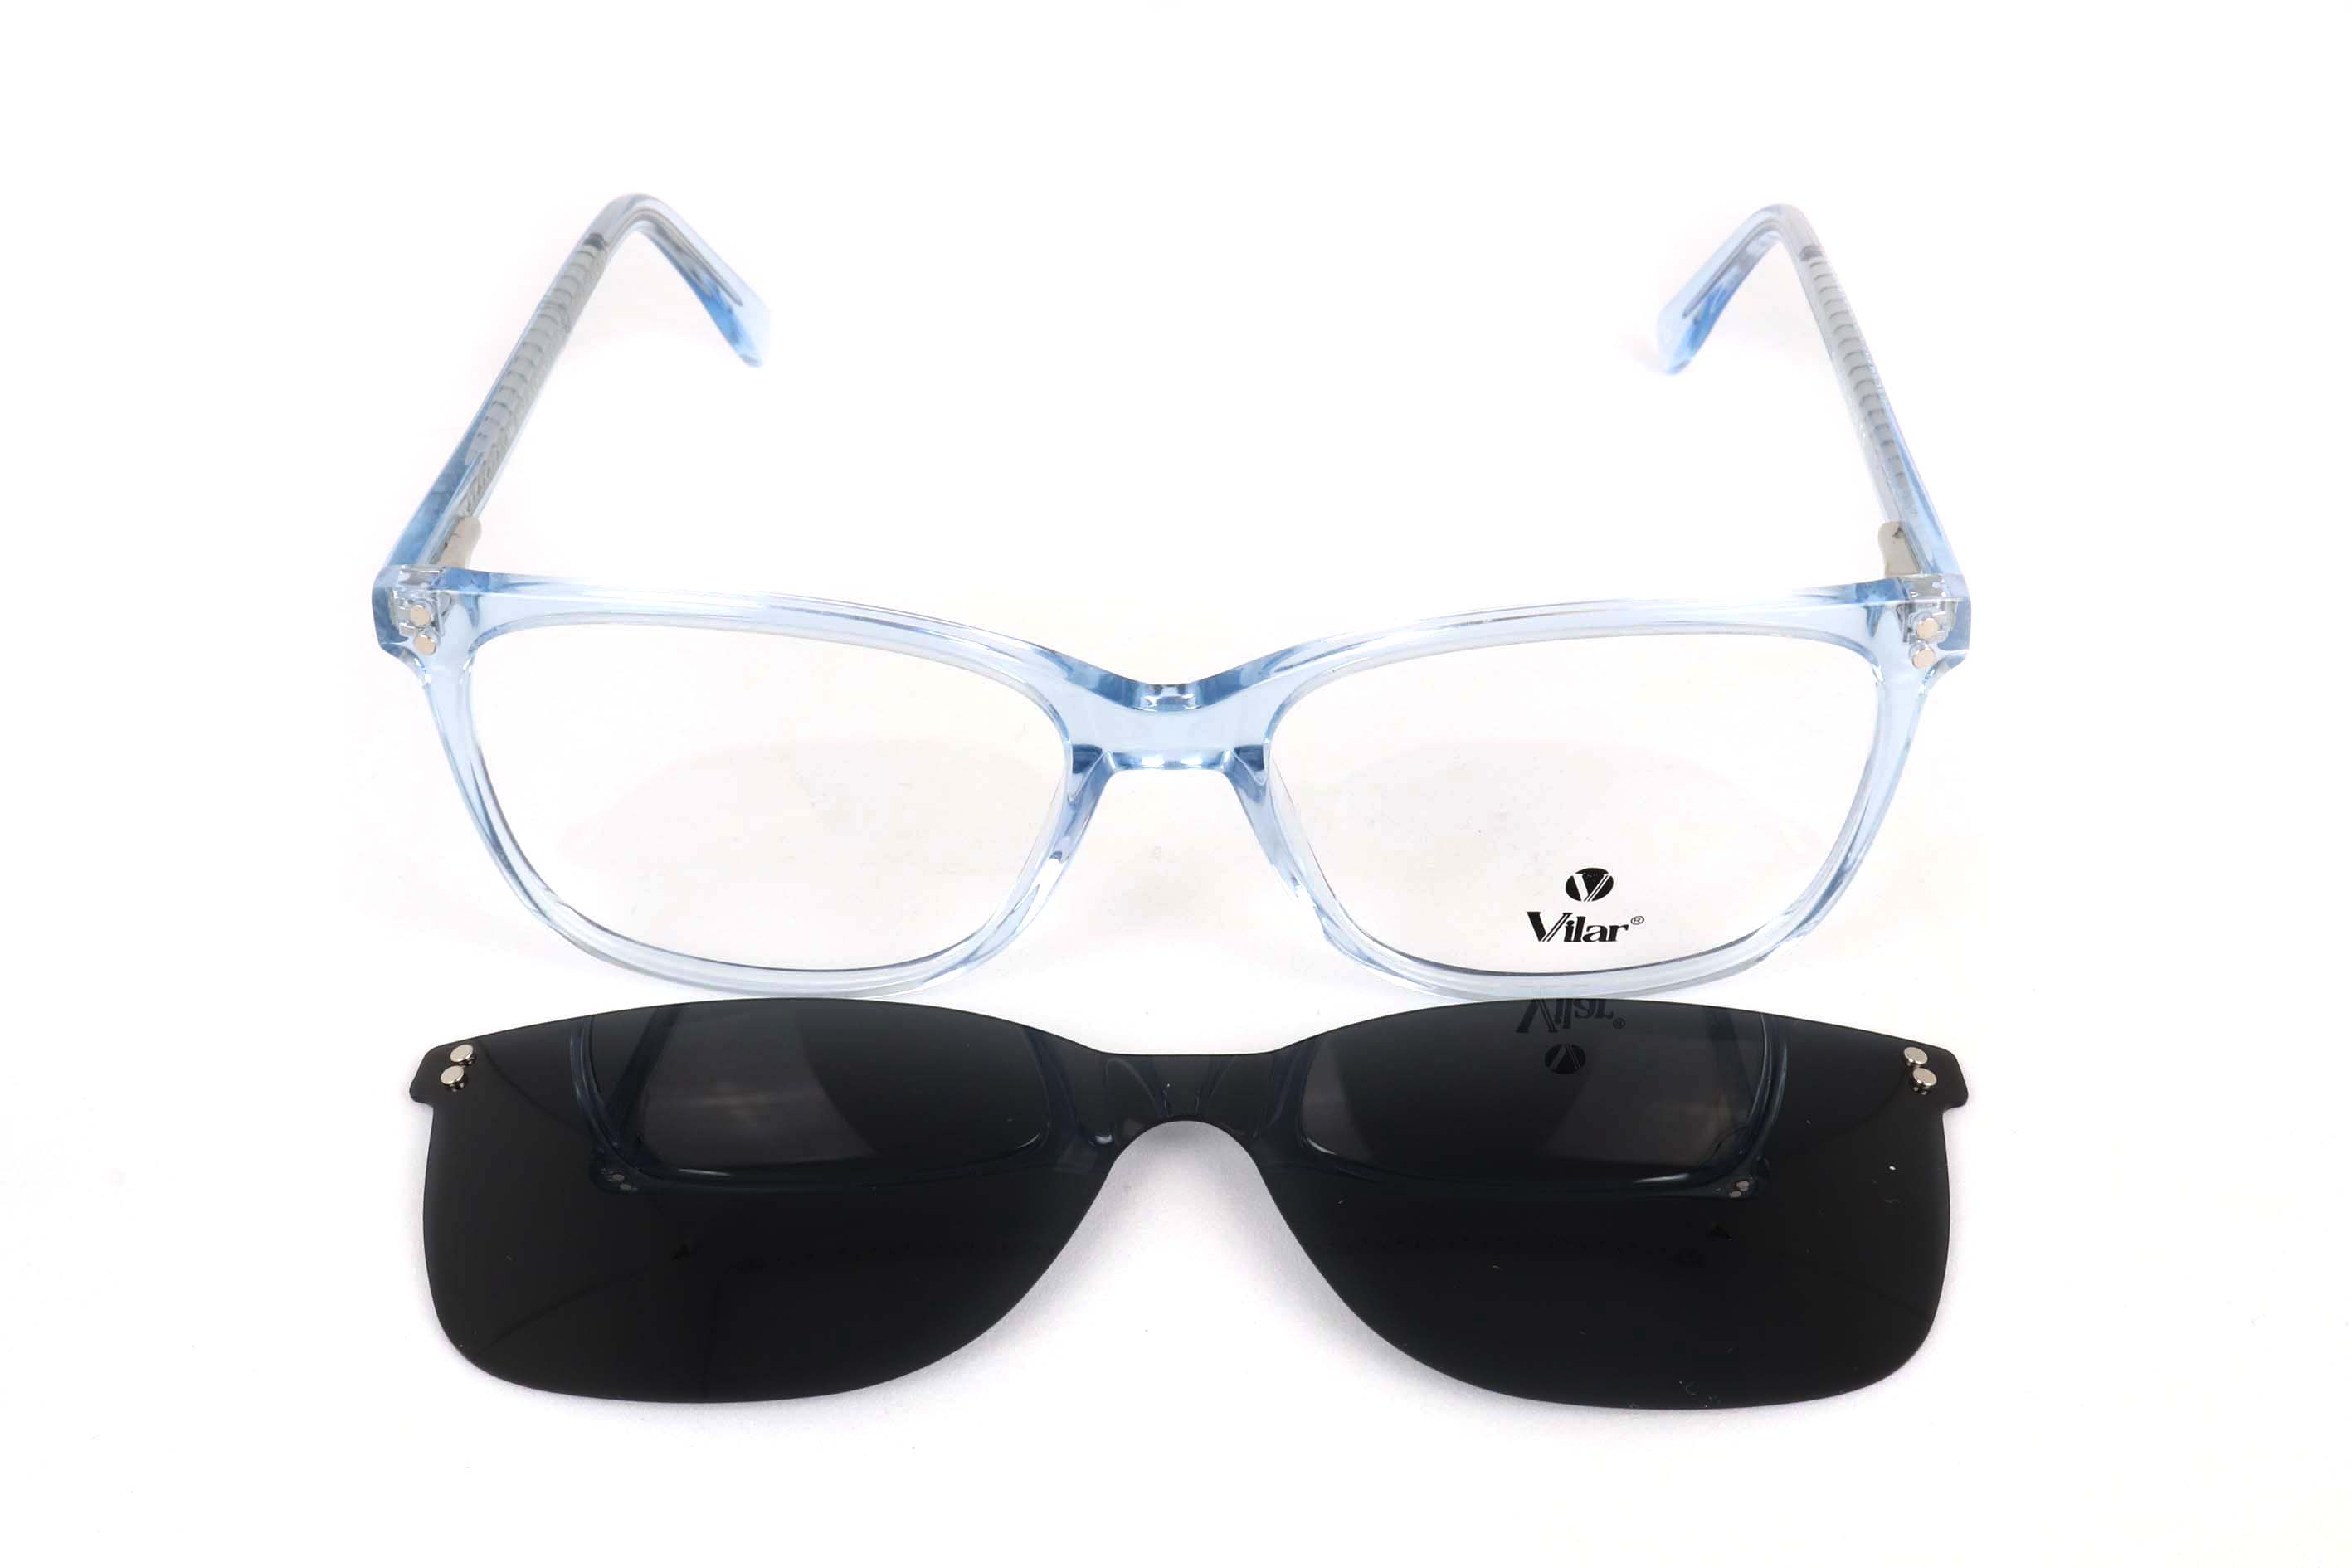 Vilar Eyeglasses -G5126-C2-54-18-145